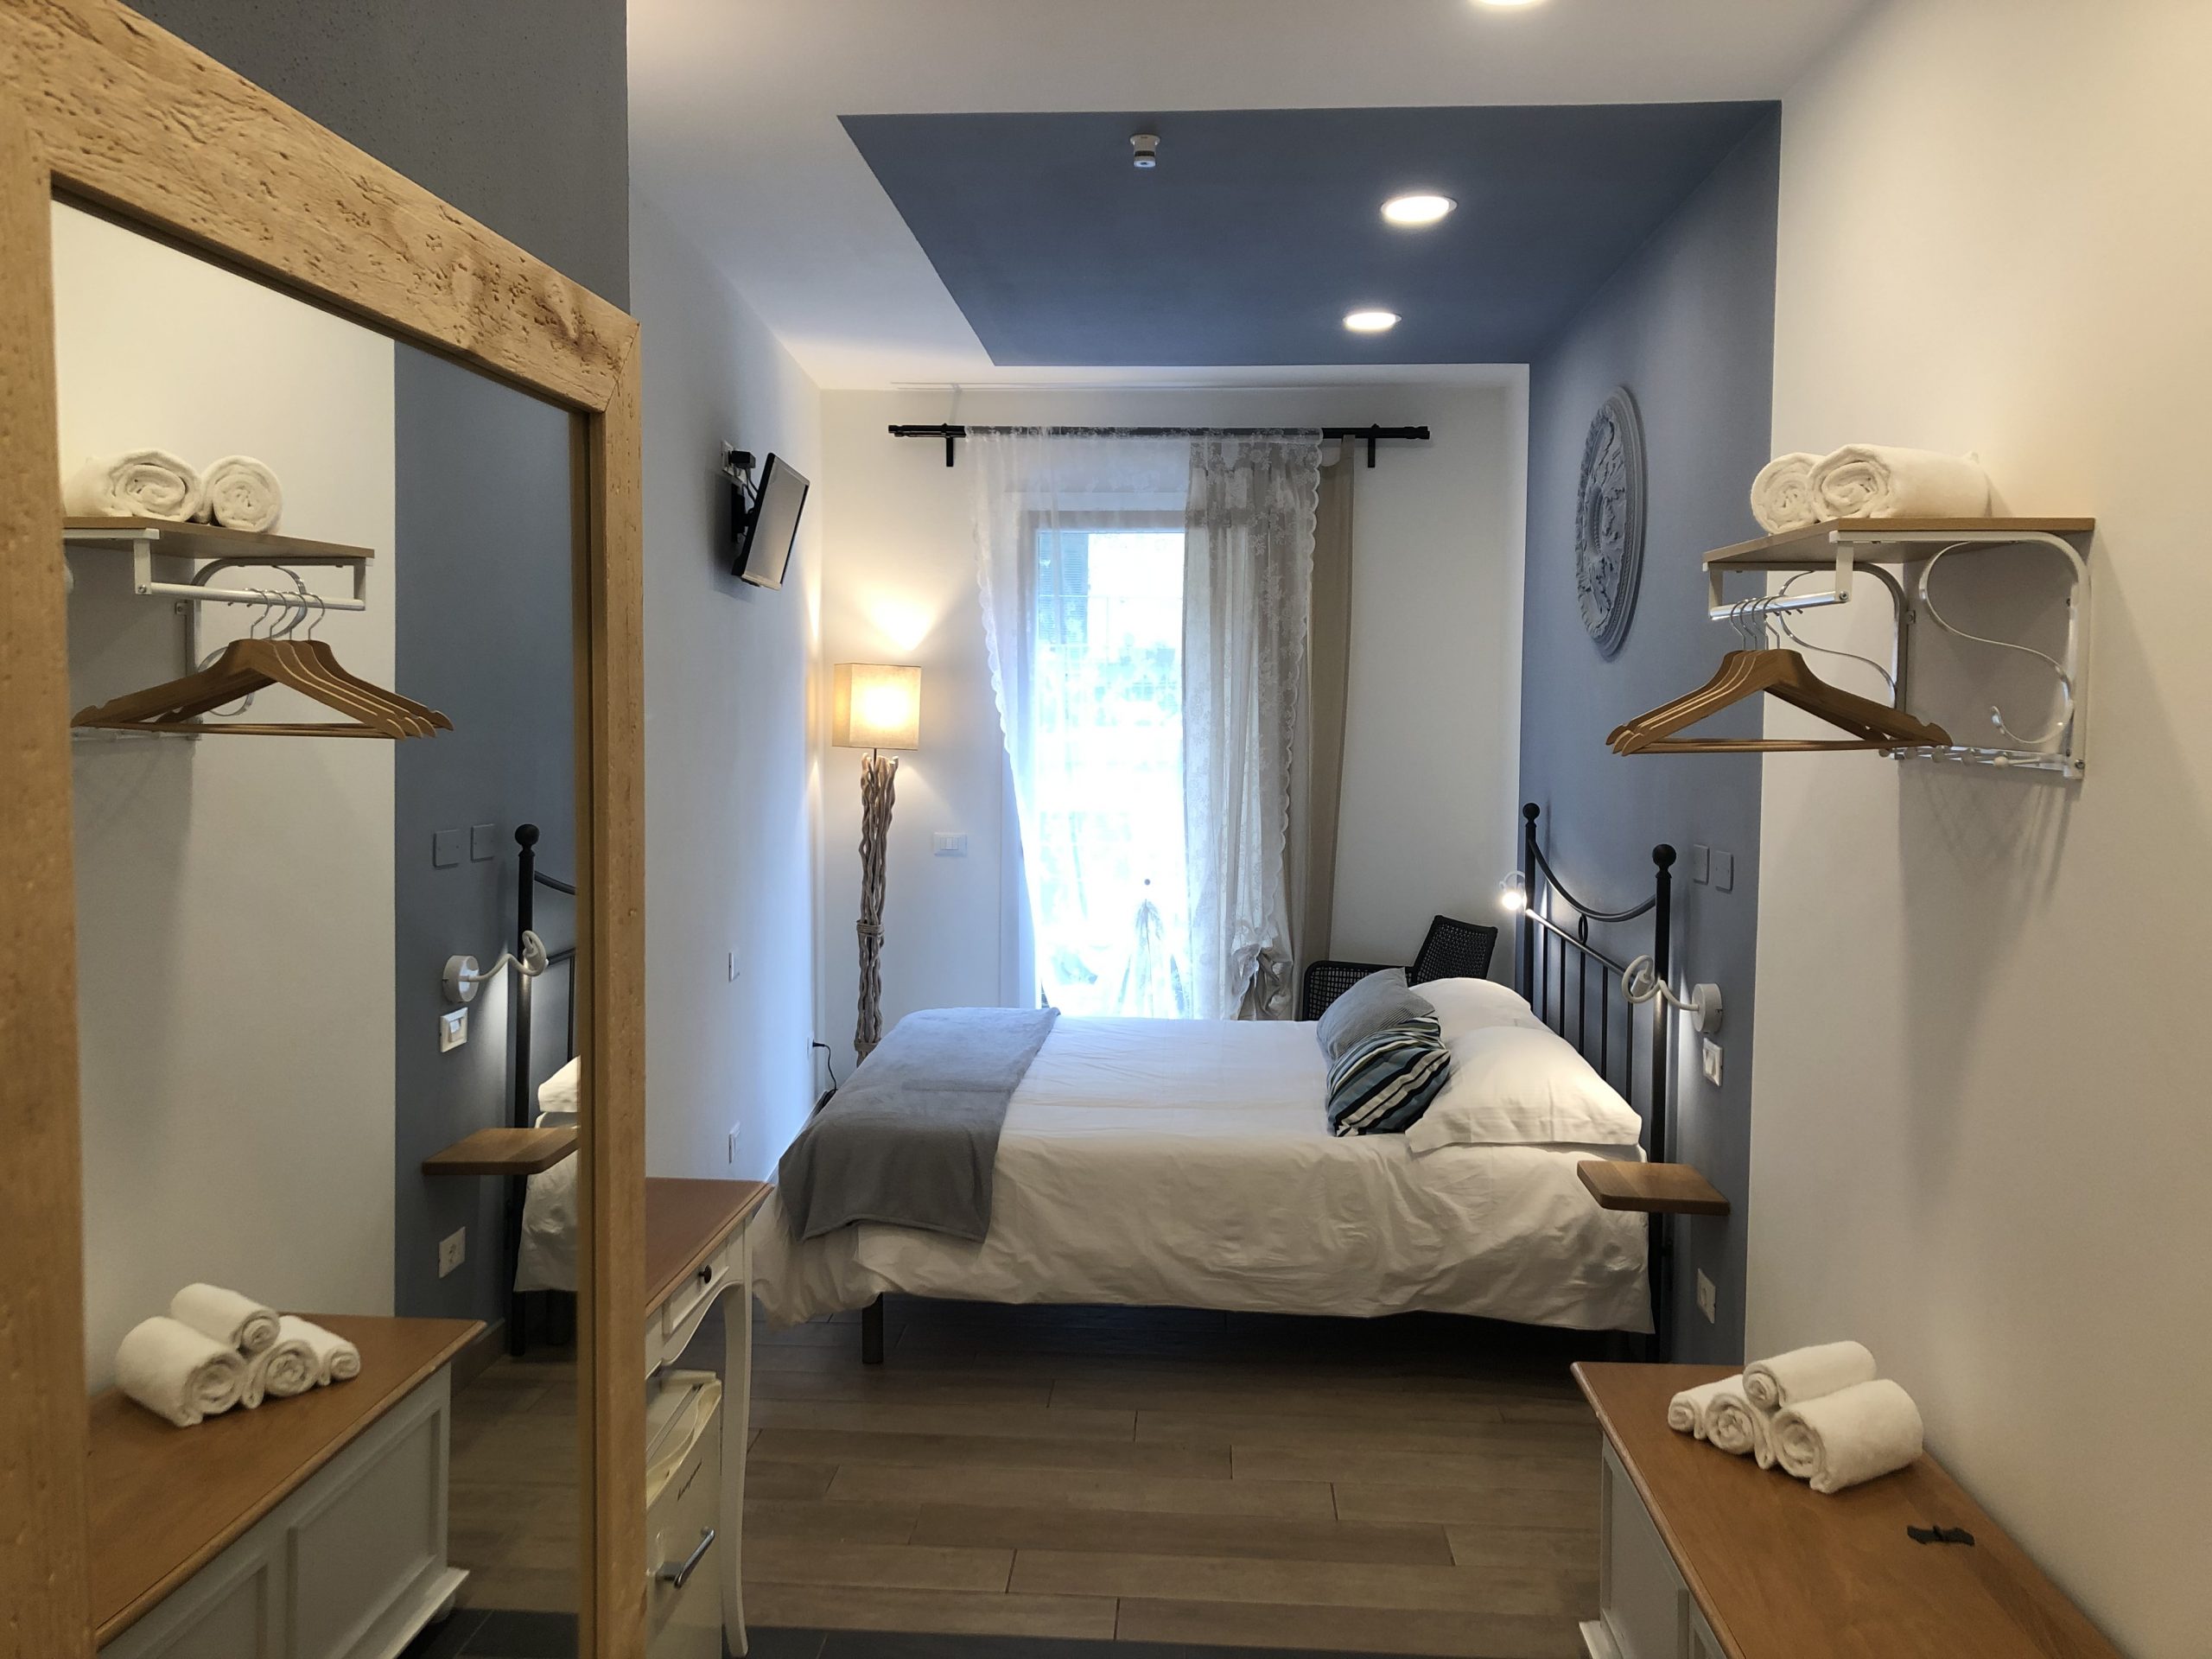 Chambres et Appartements Manarola Cinque Terre